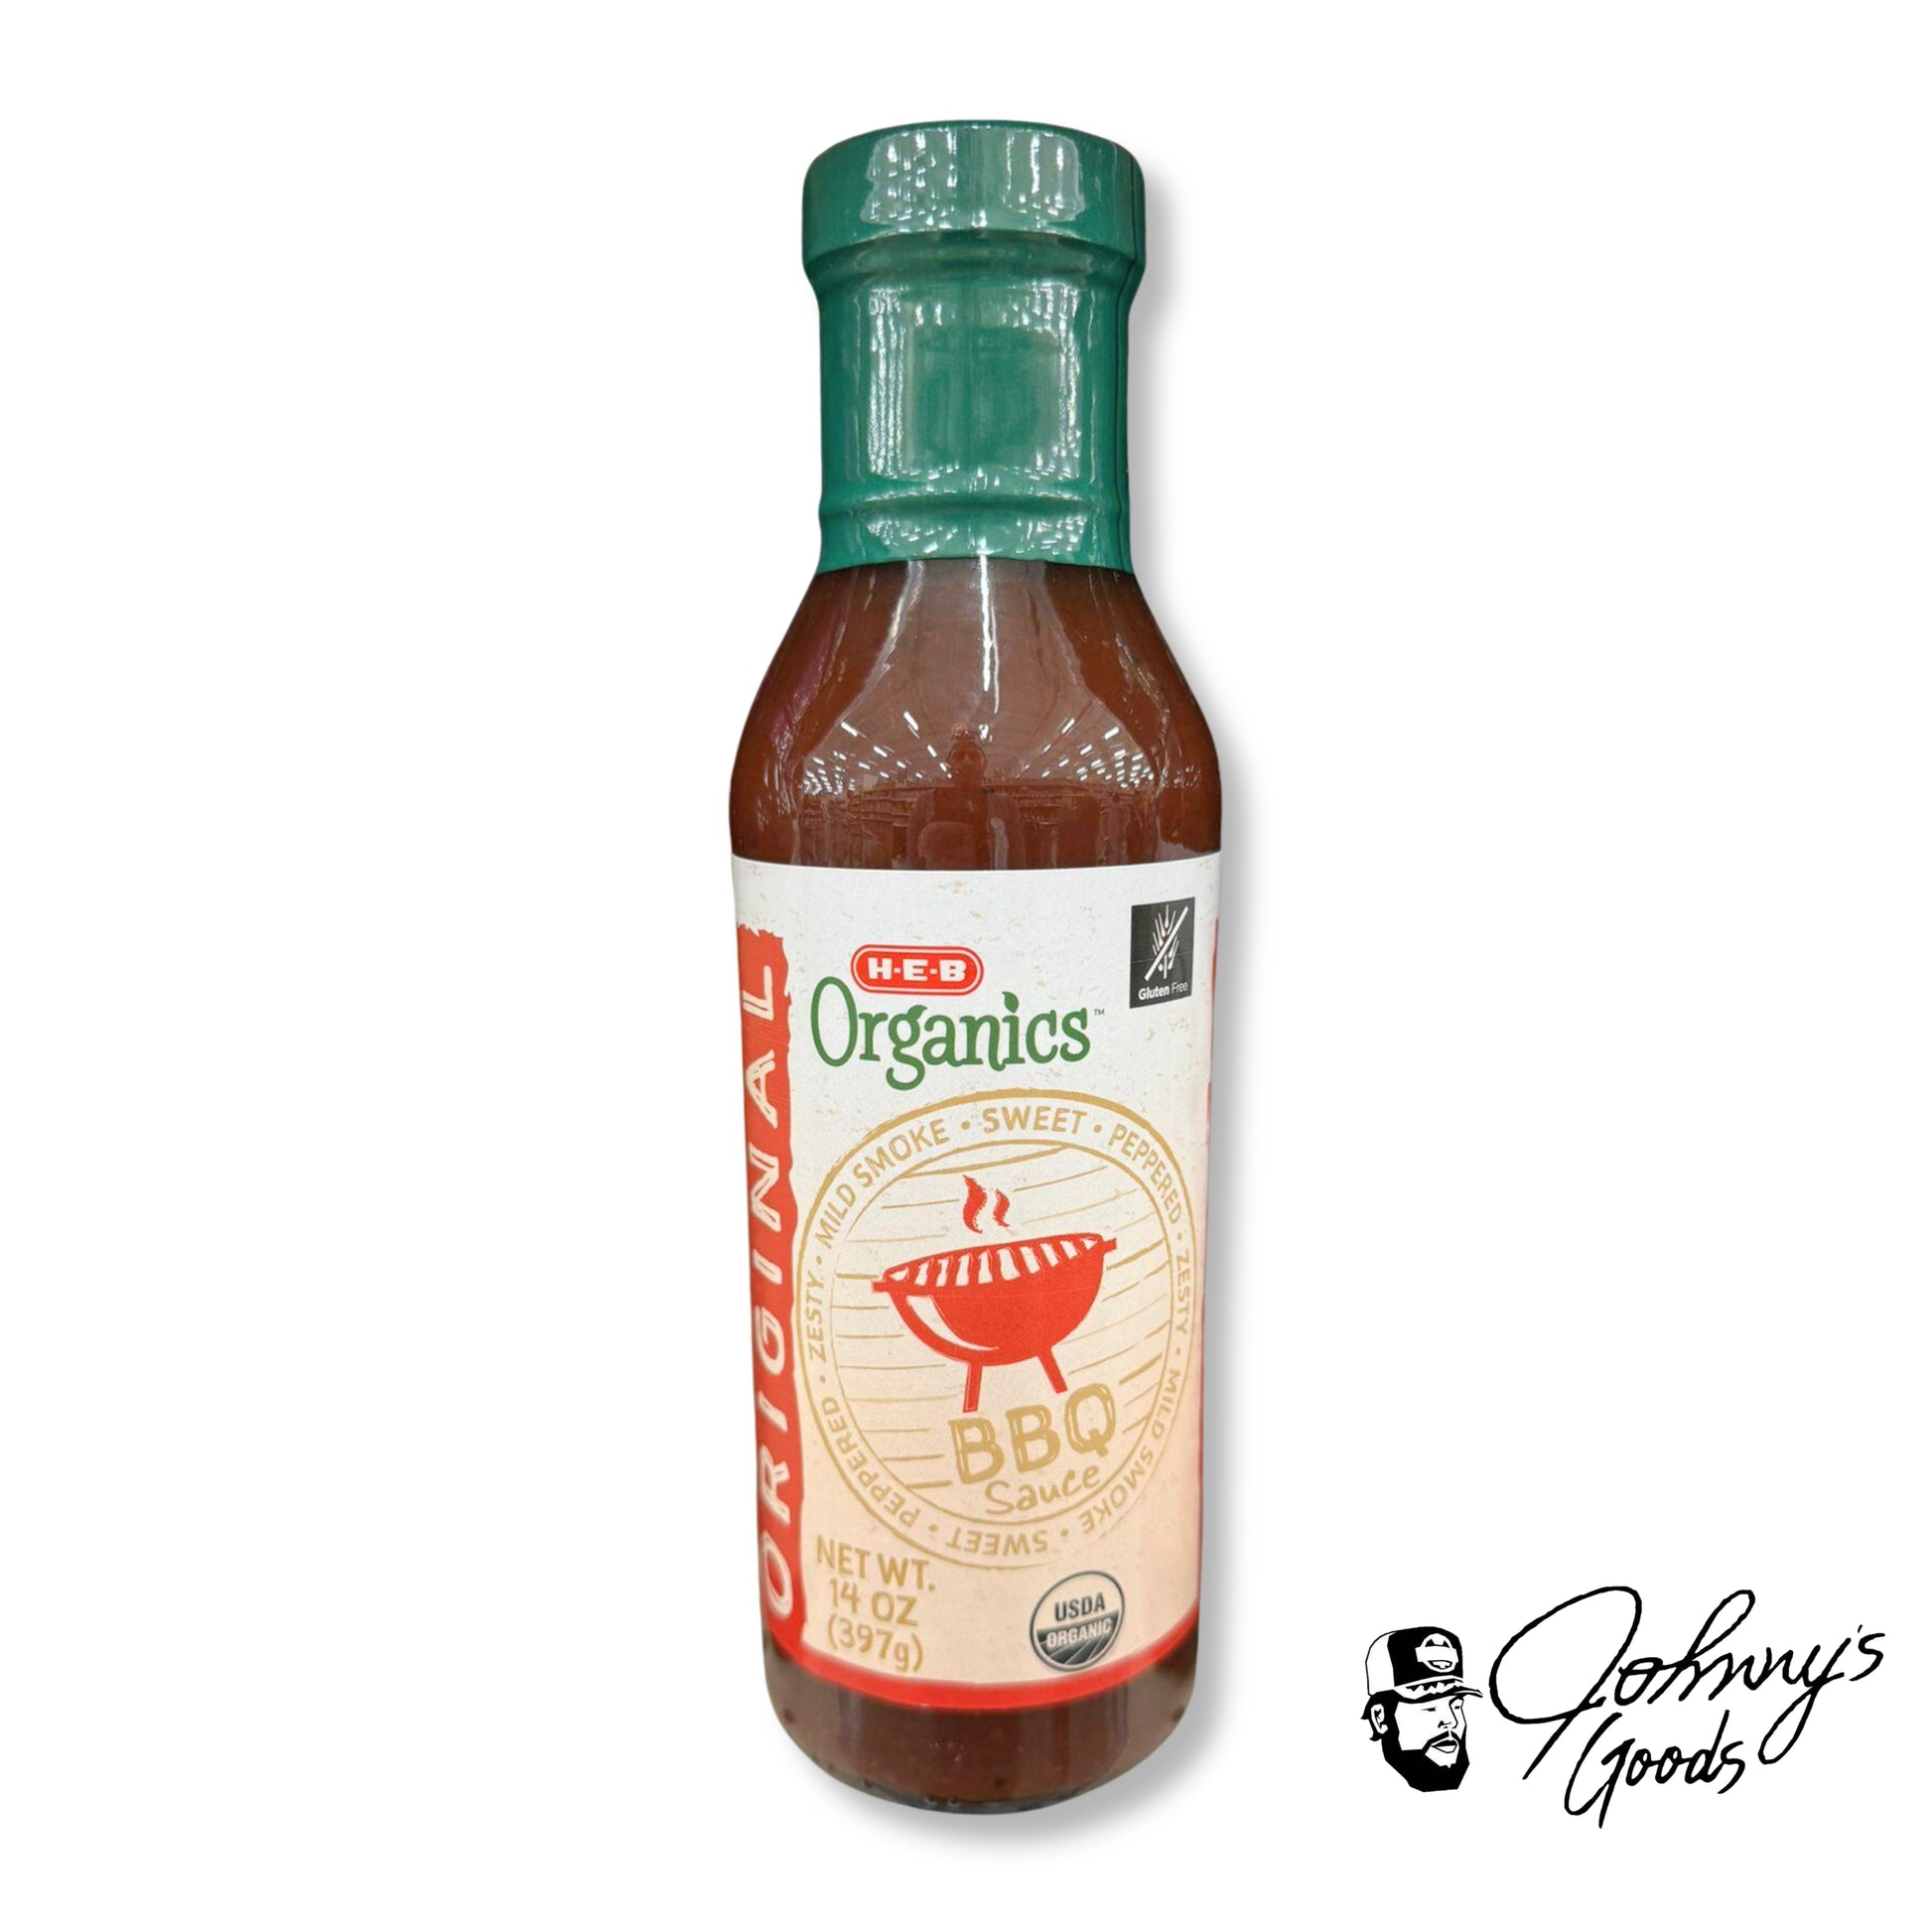 H‑E‑B Organics BBQ Sauce heb bbq sauces condiments barbeque flavor